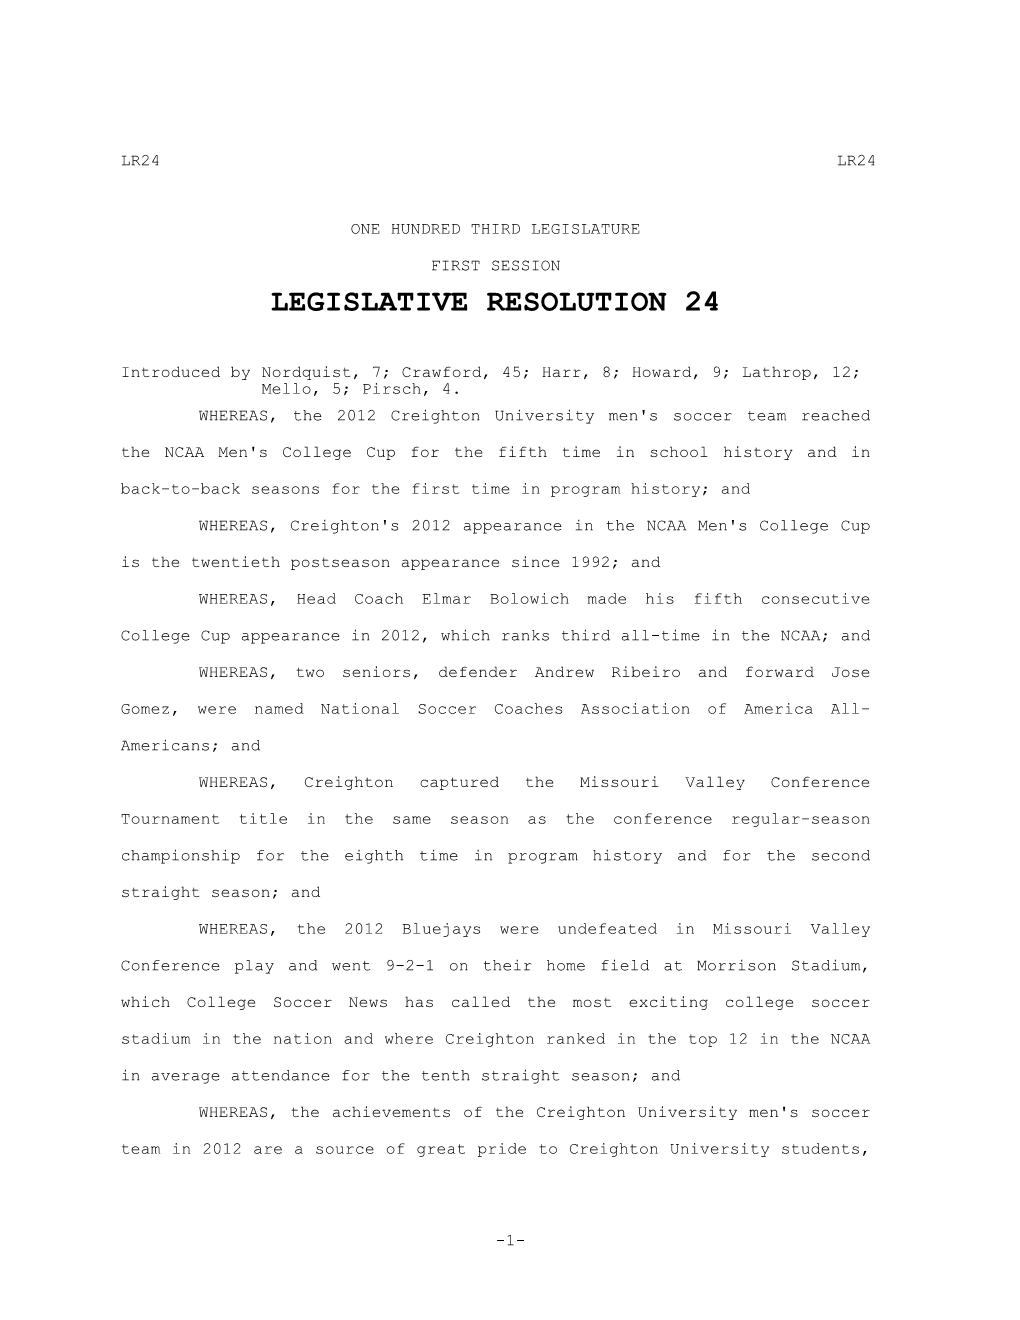 Legislative Resolution 24